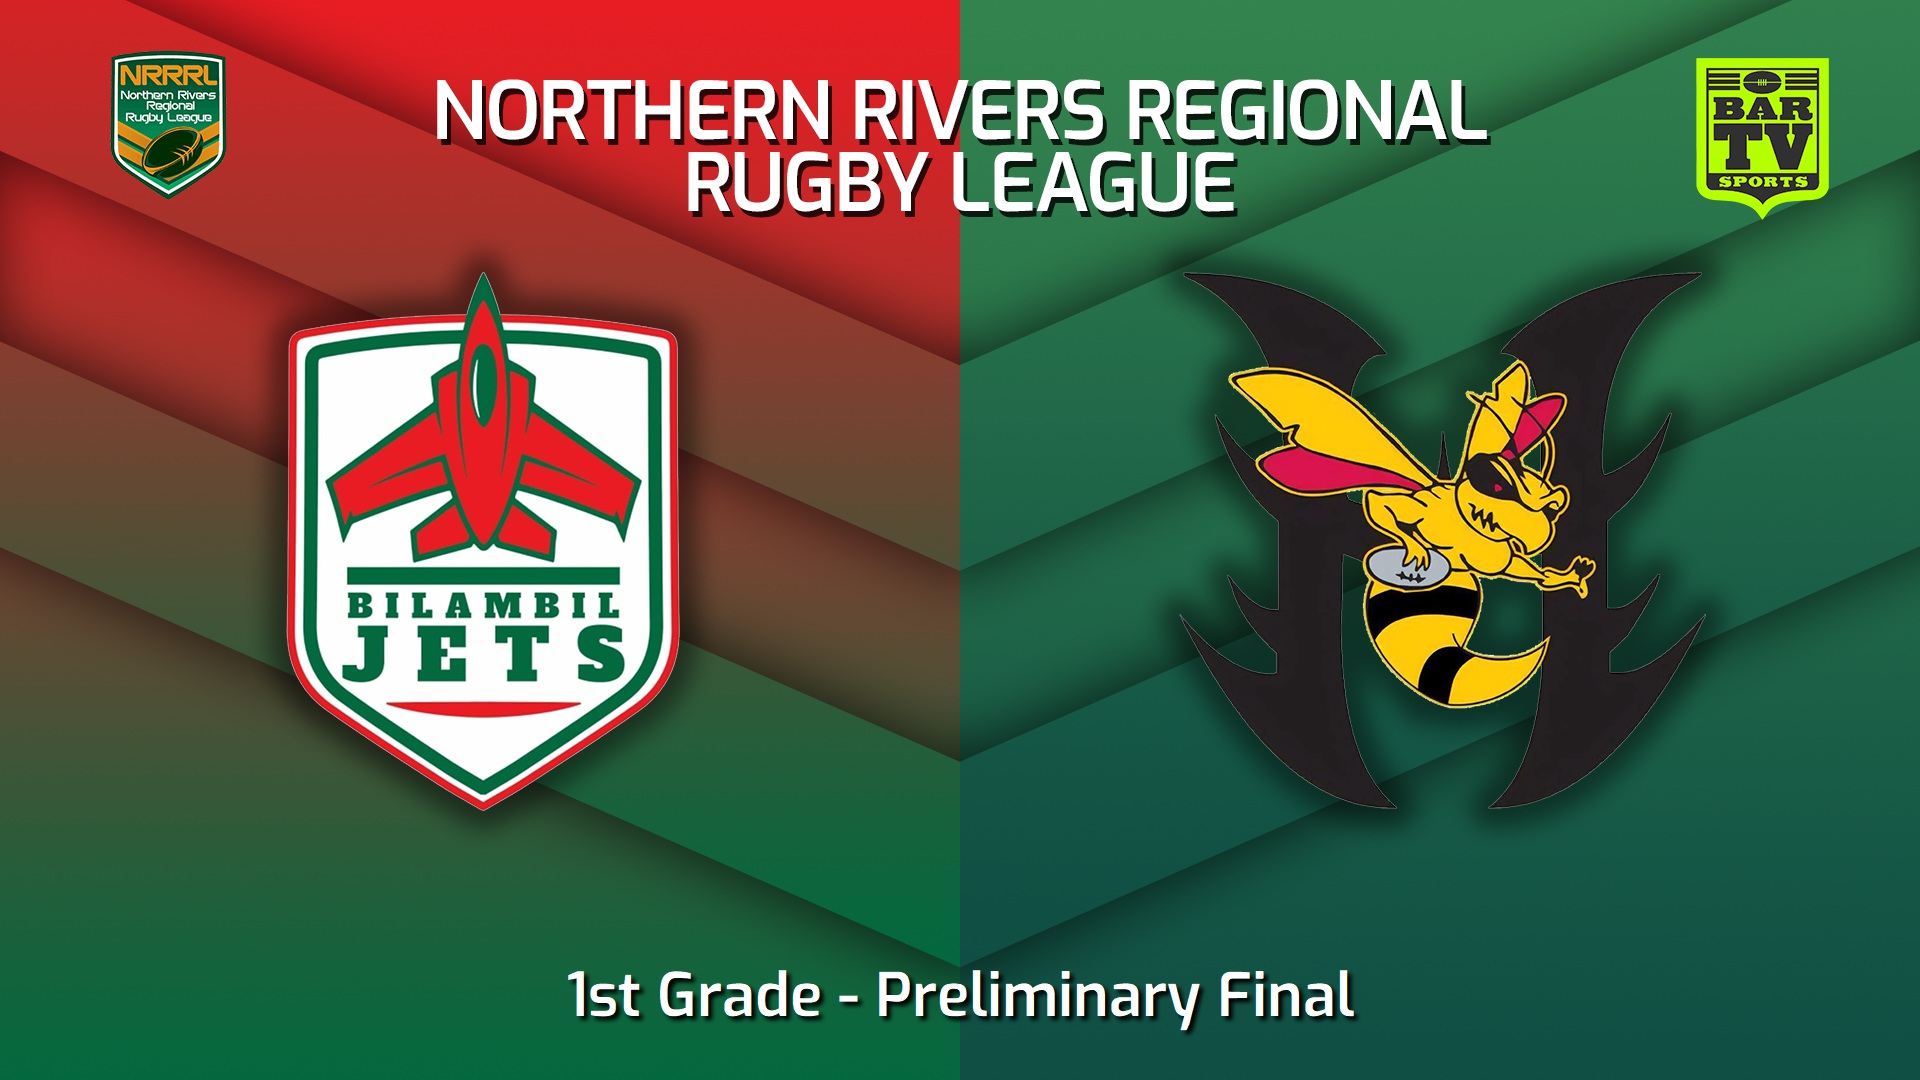 Northern Rivers Preliminary Final - 1st Grade - Bilambil Jets v Cudgen ...